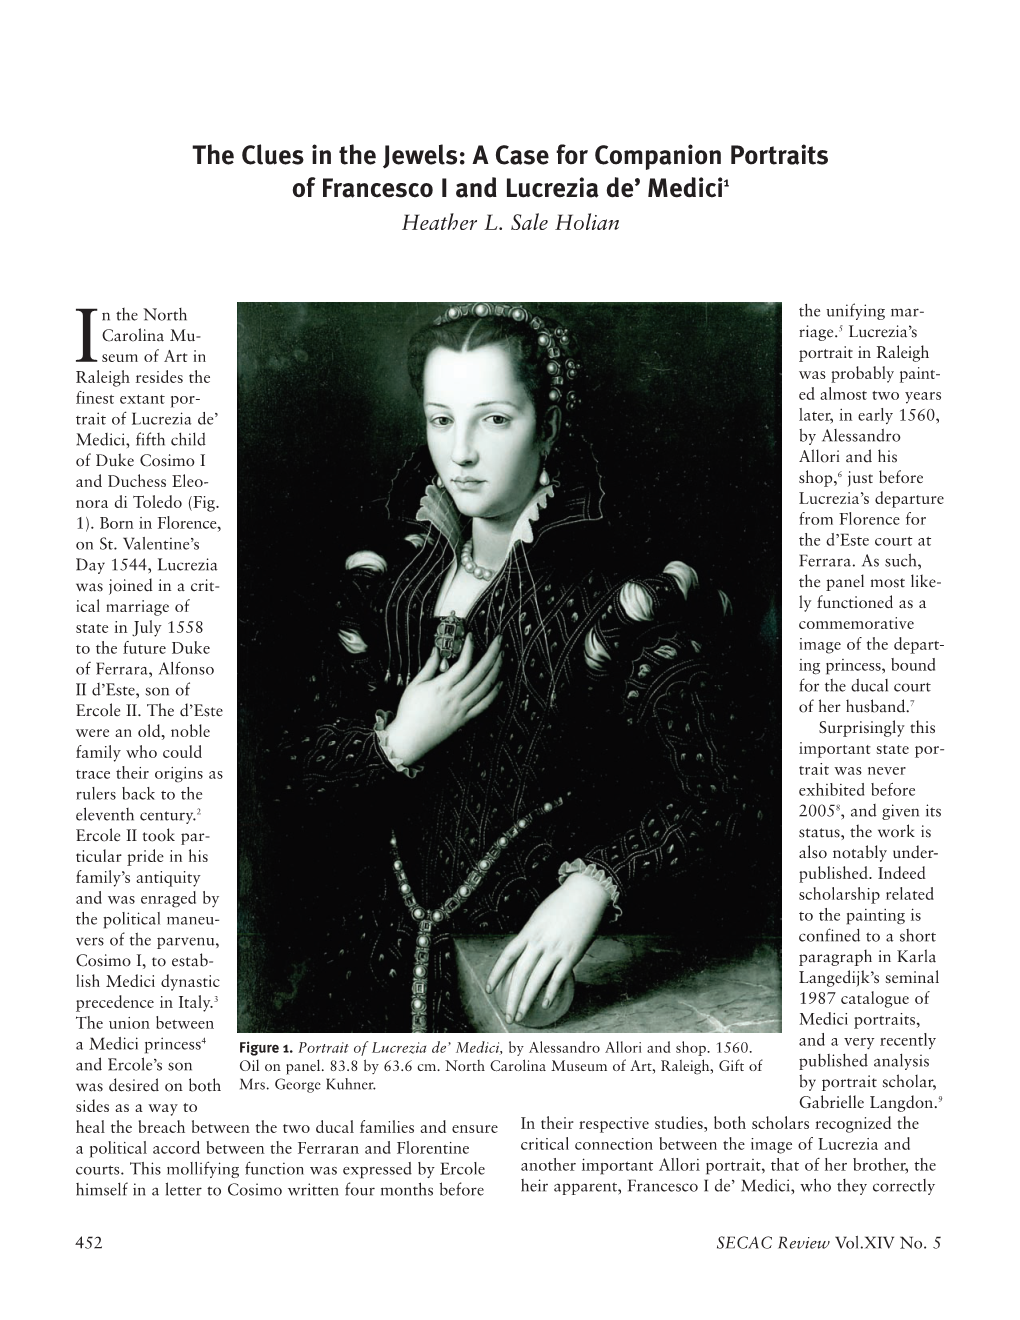 The Clues in the Jewels: a Case for Companion Portraits of Francesco I and Lucrezia De’ Medici1 Heather L